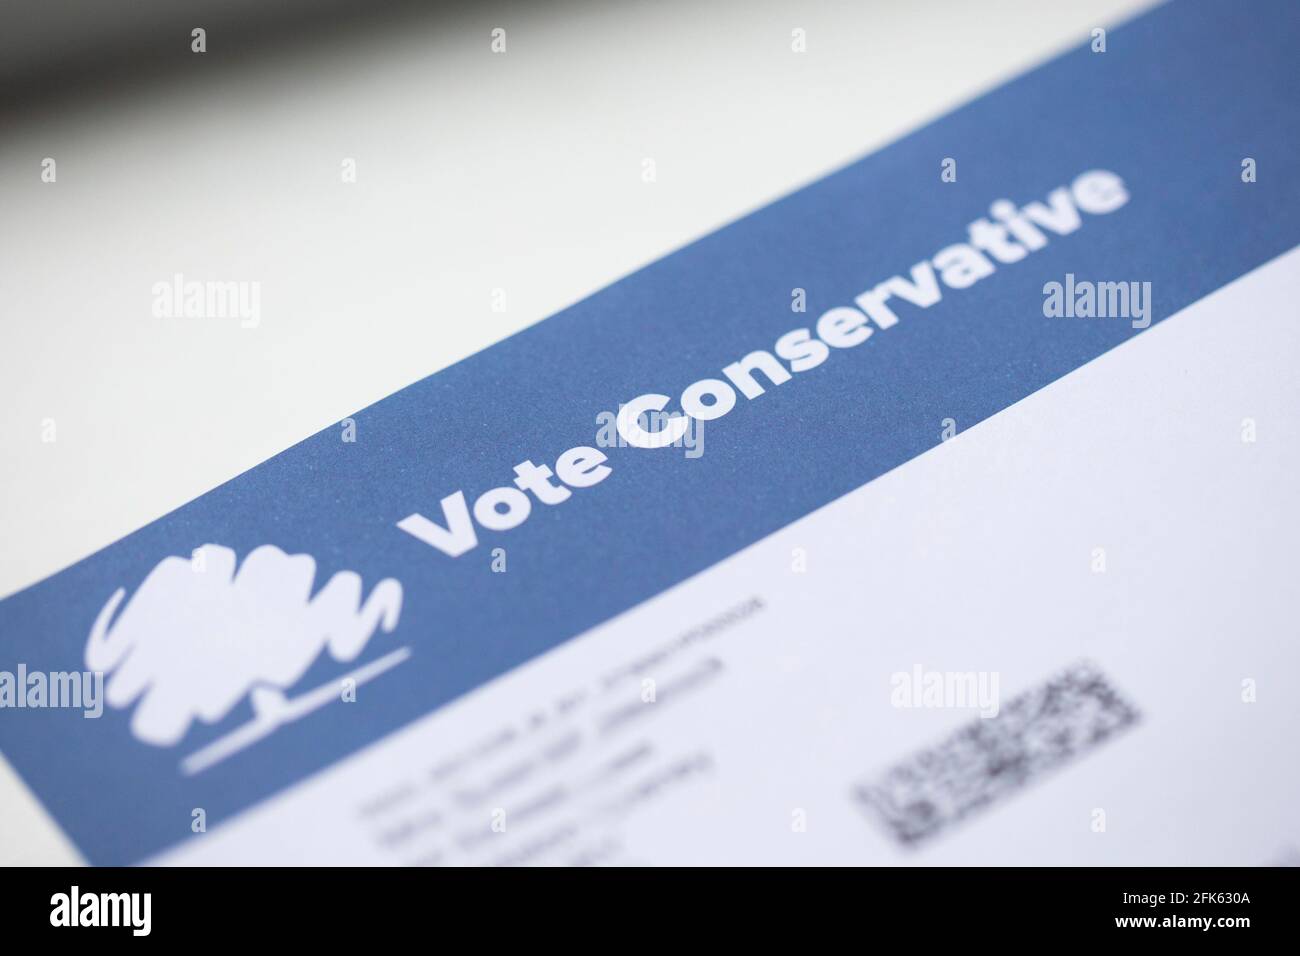 LONDON, UK - April 2021: Conservative political party logo on campaign literature Stock Photo